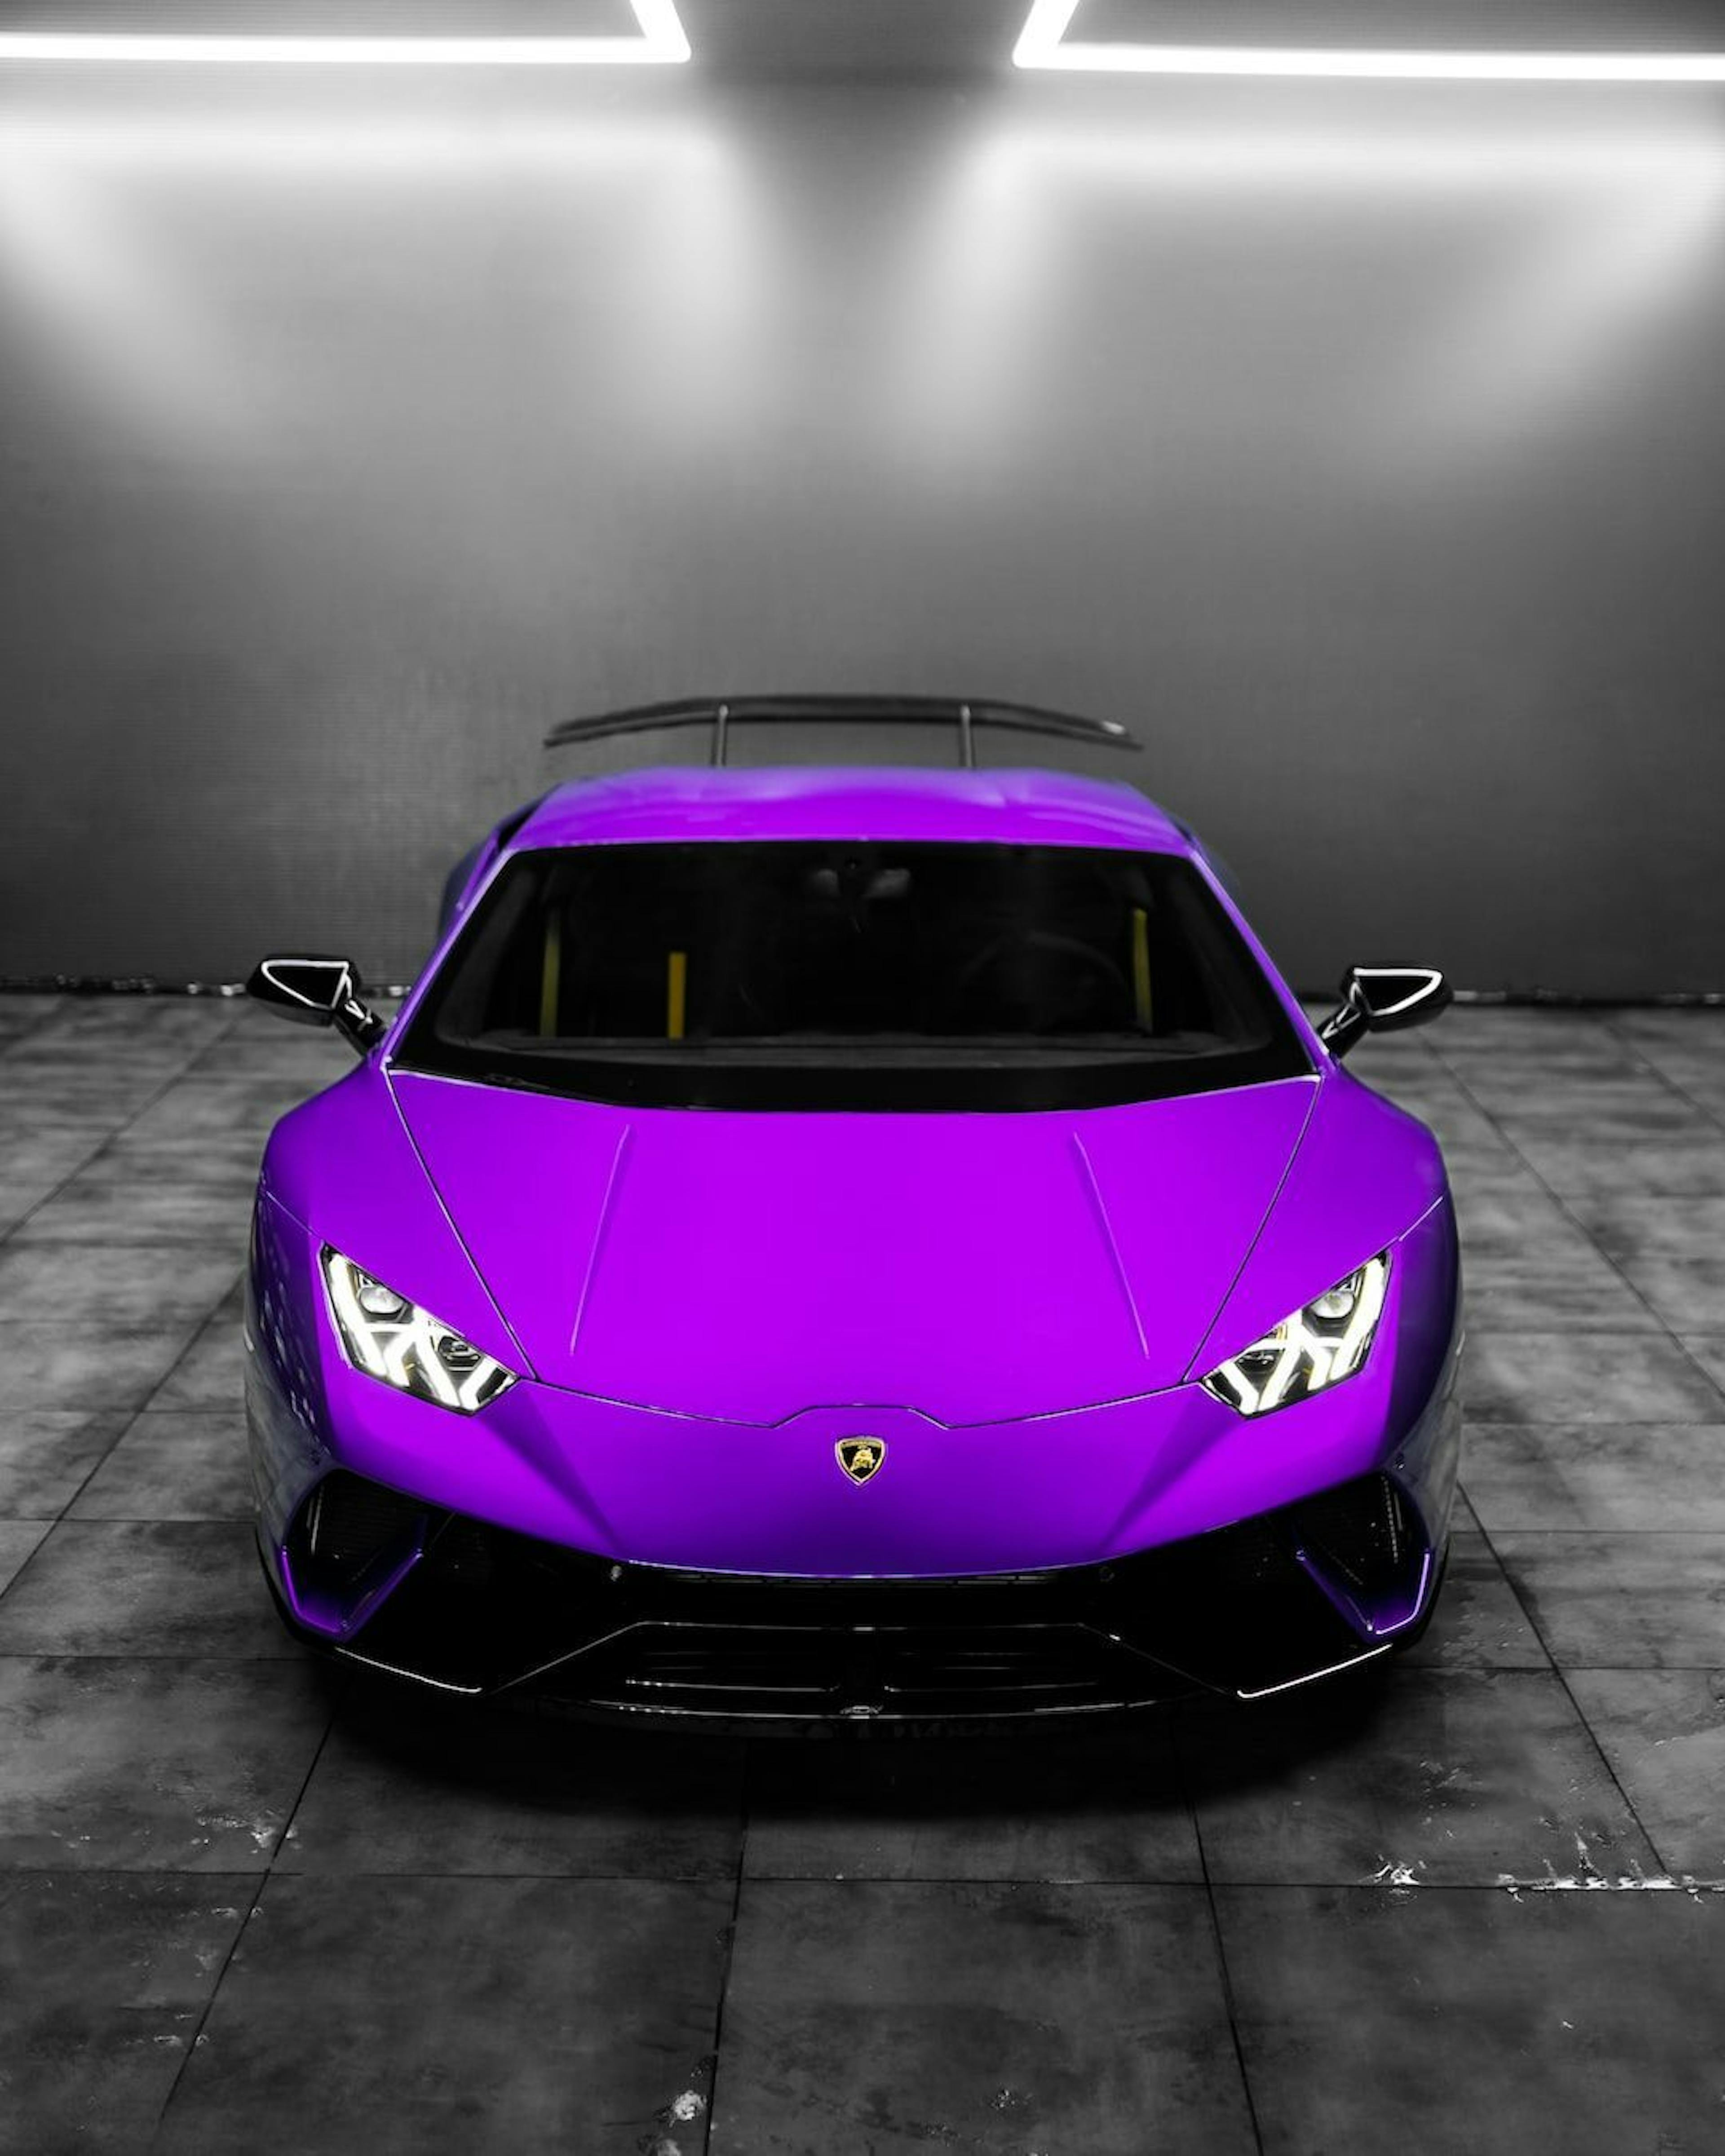 featured image - $PEPE, um Lamborghini roxo e muito mais: a história continua